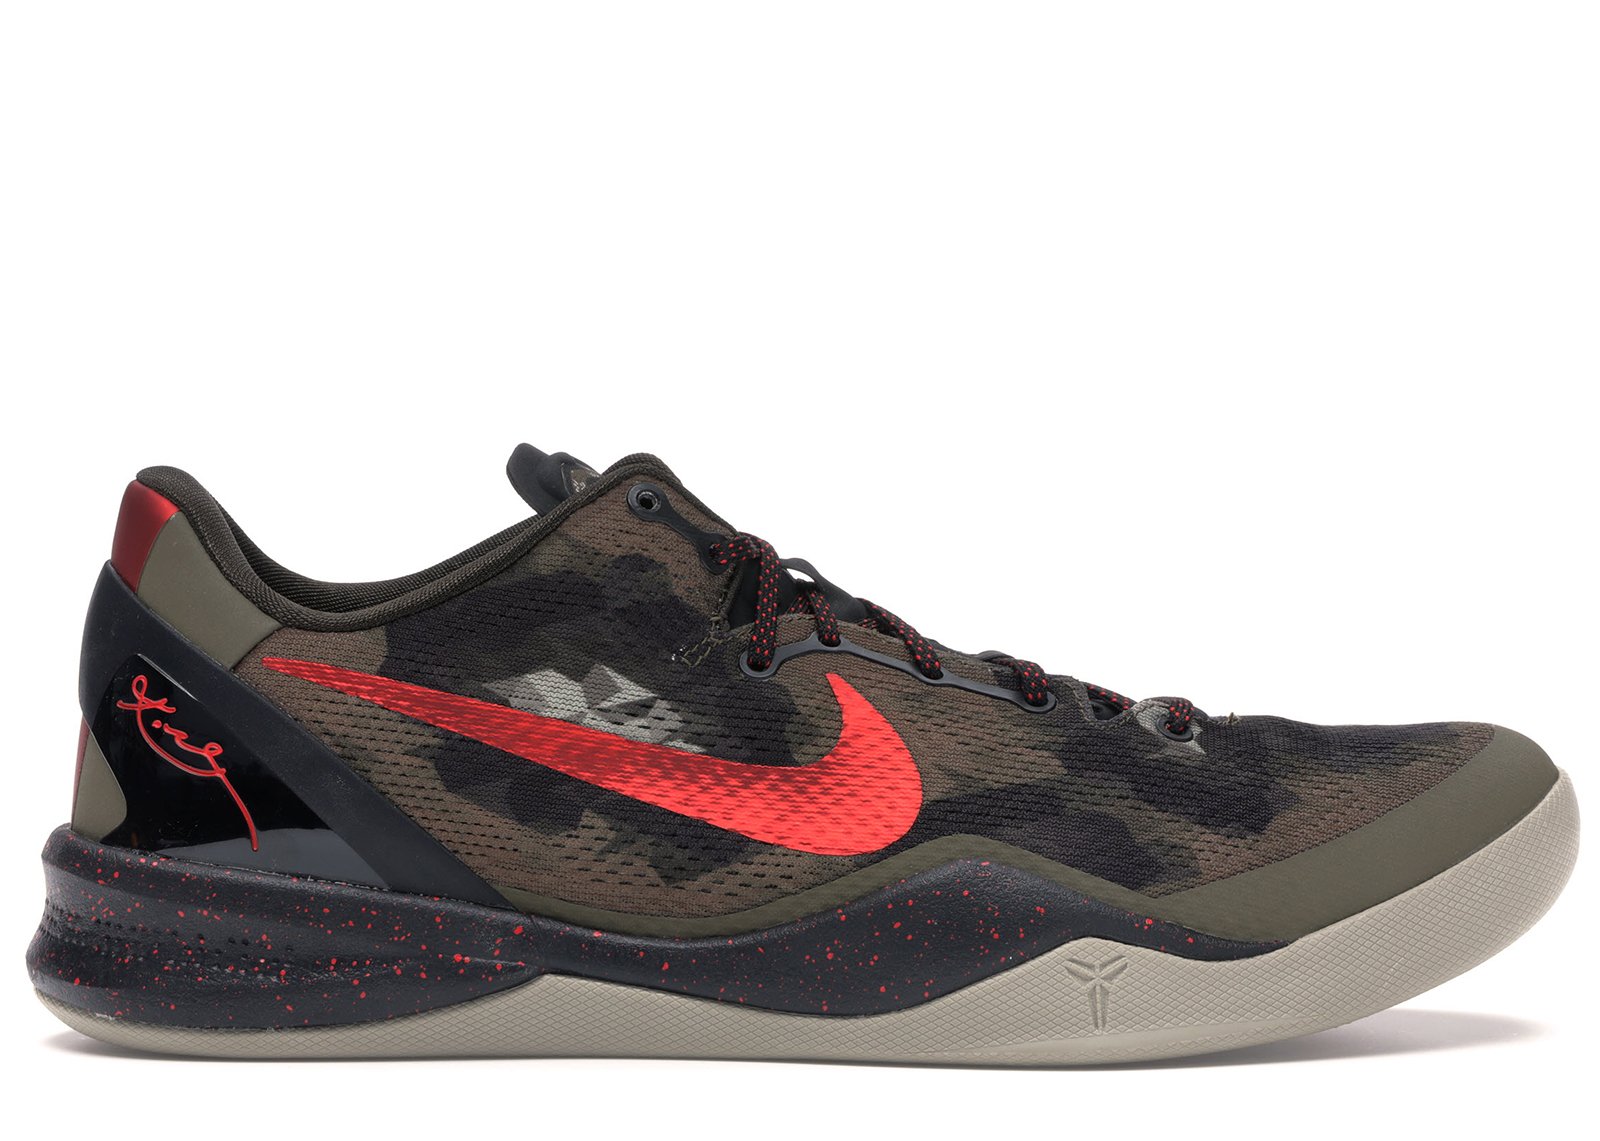 Nike Kobe 8 Python sneakers